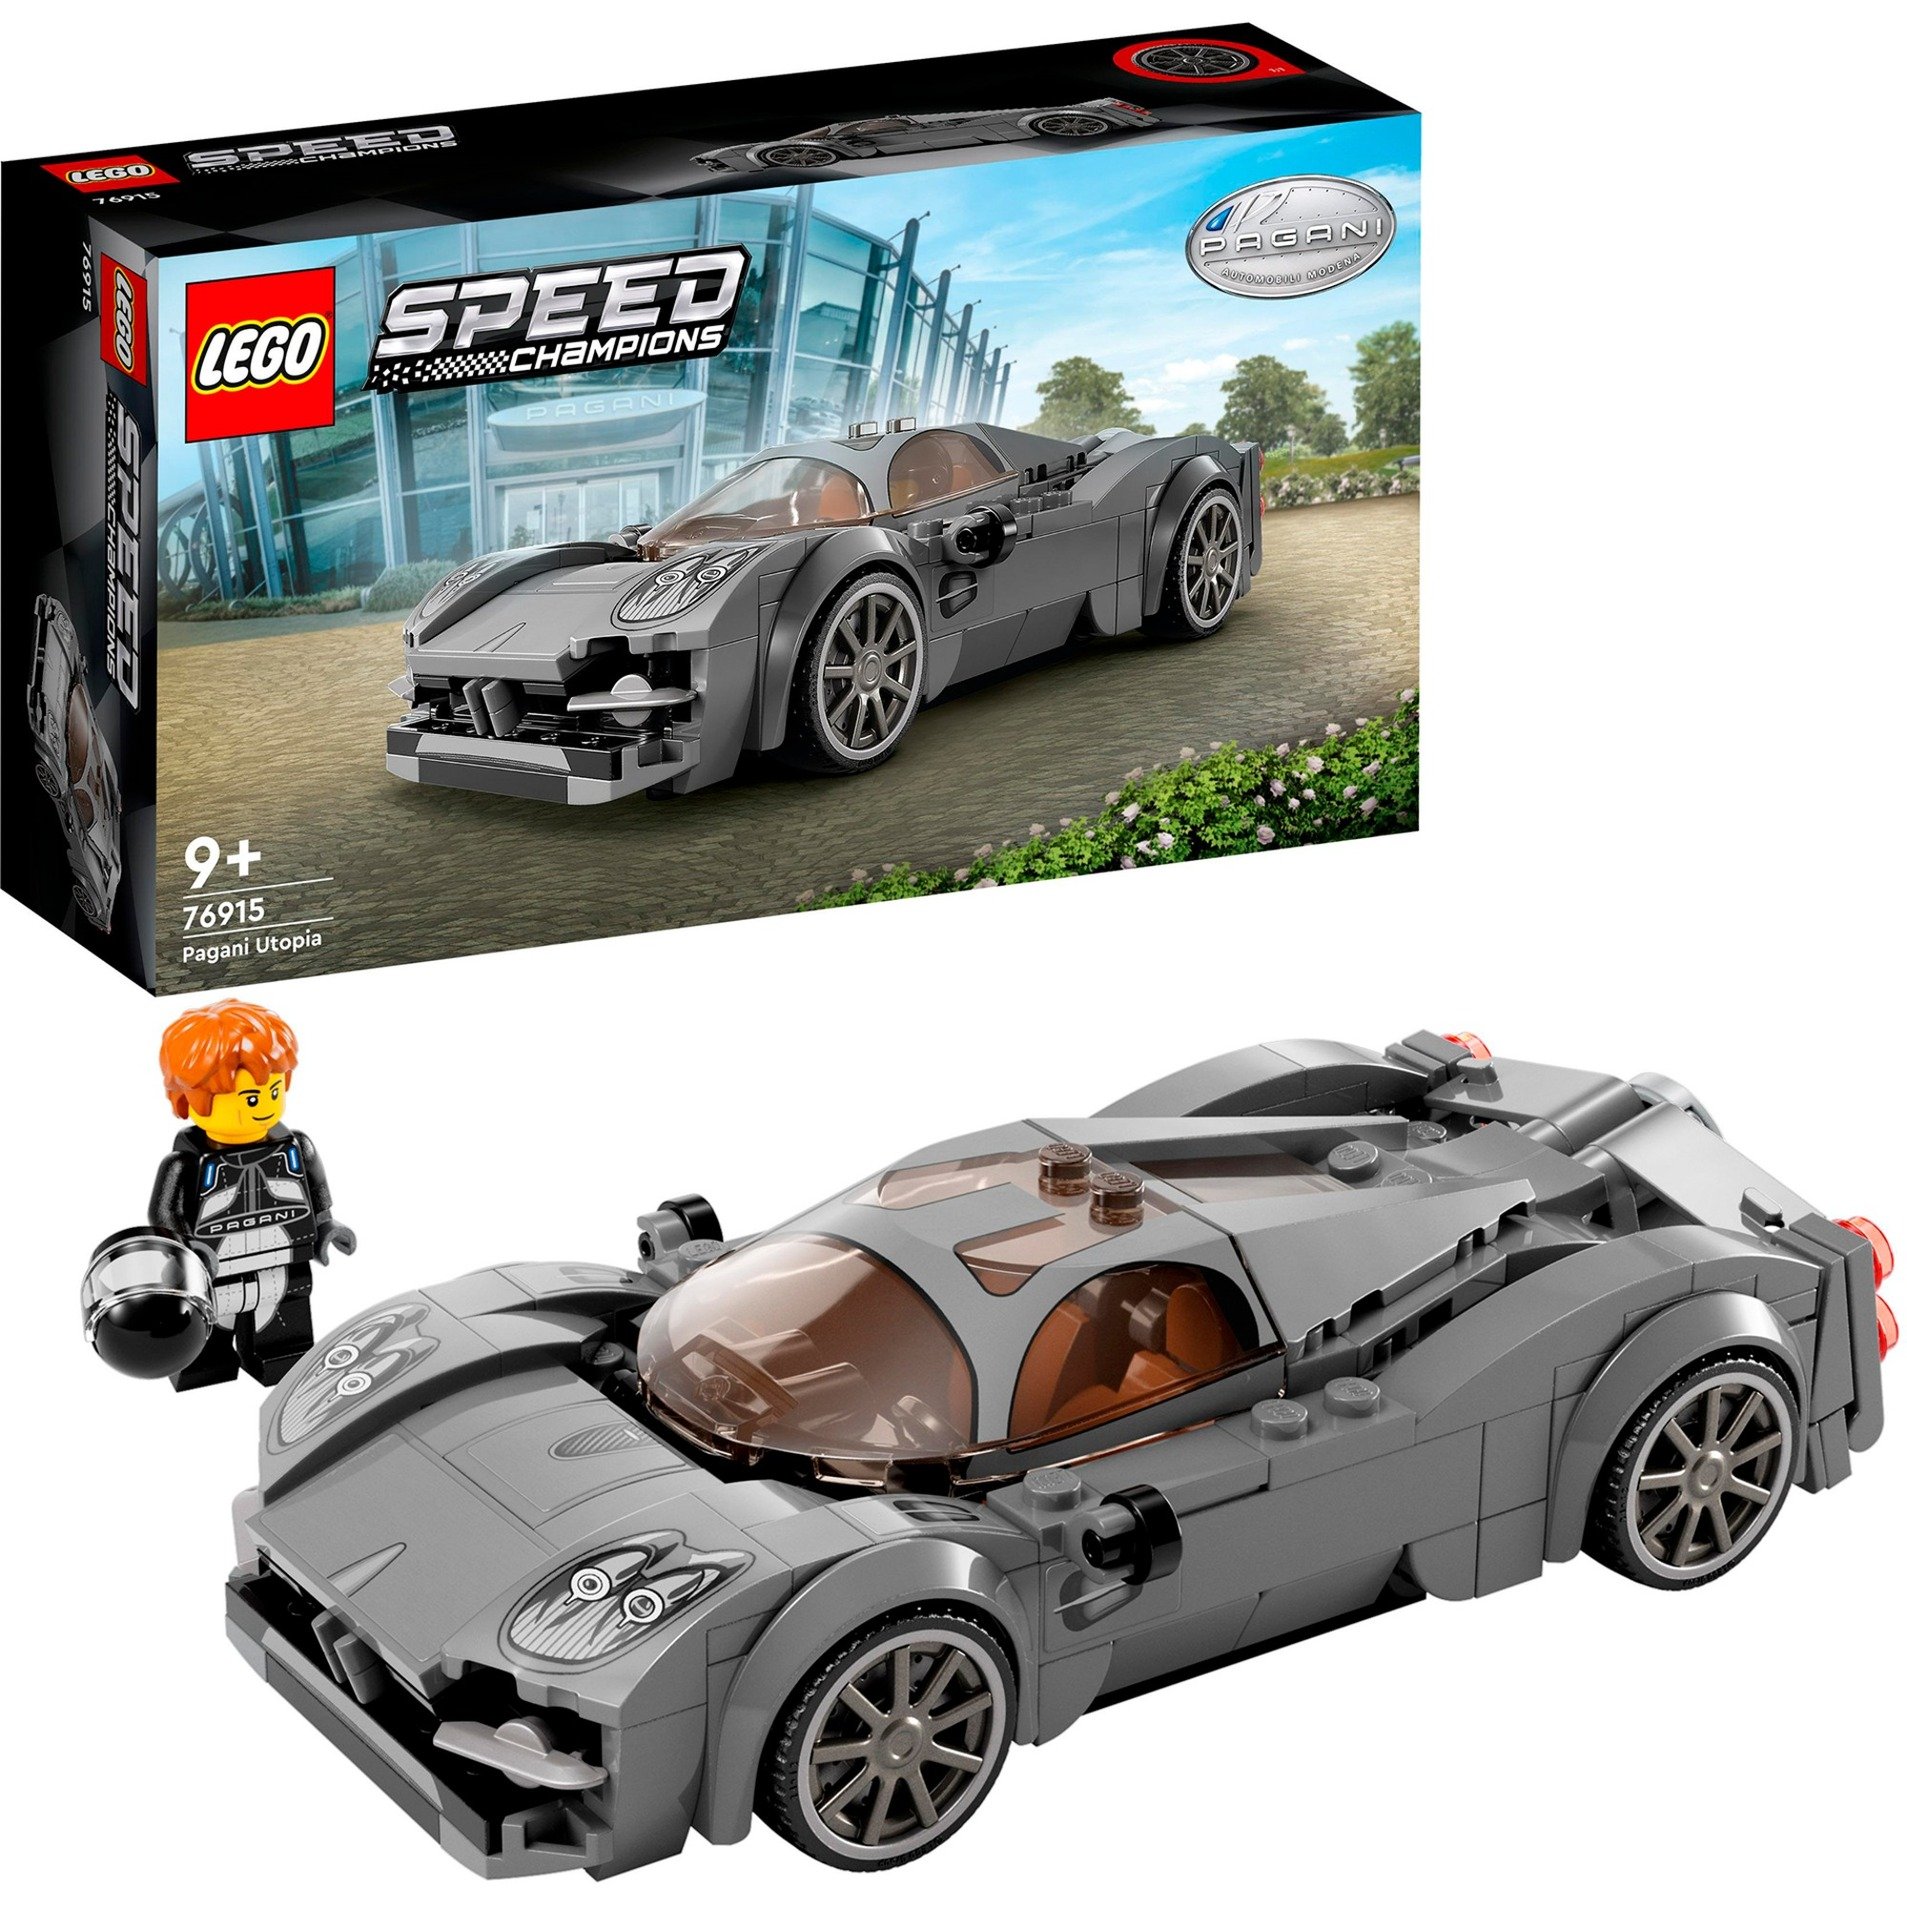 76915 Speed Champions Pagani Utopia, Konstruktionsspielzeug von Lego